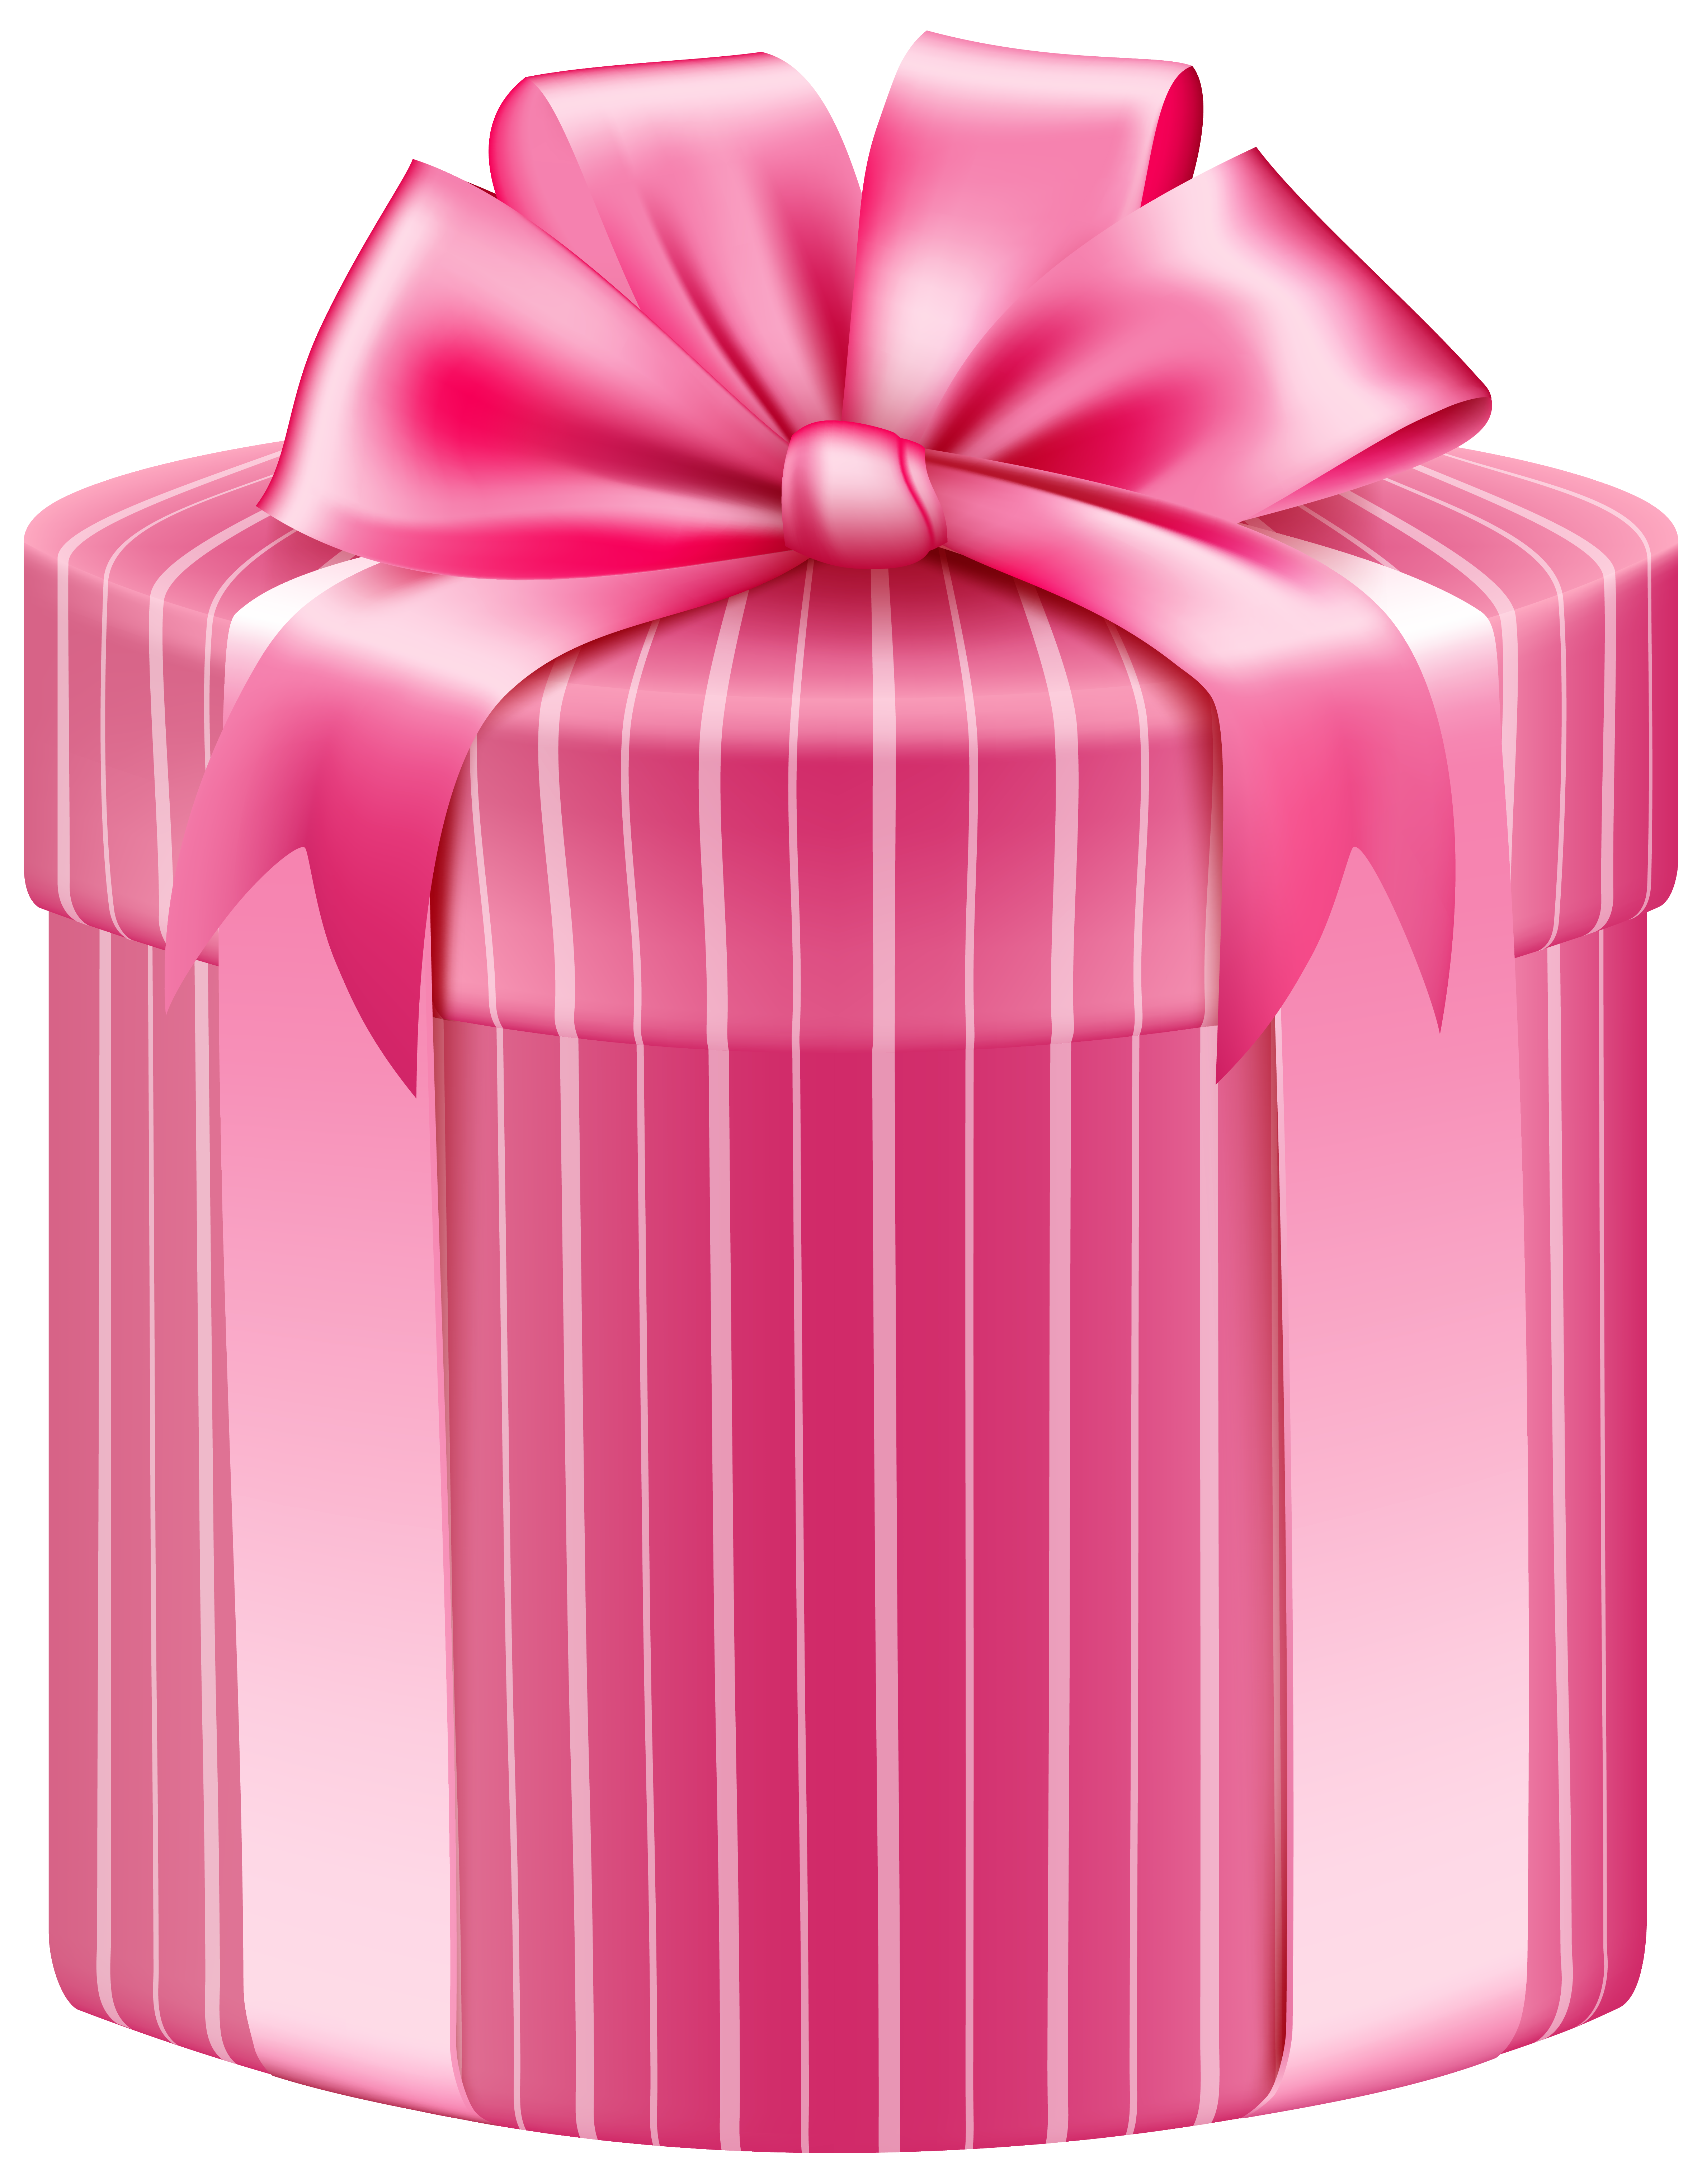 Pink striped gift box. Clipart present regalo